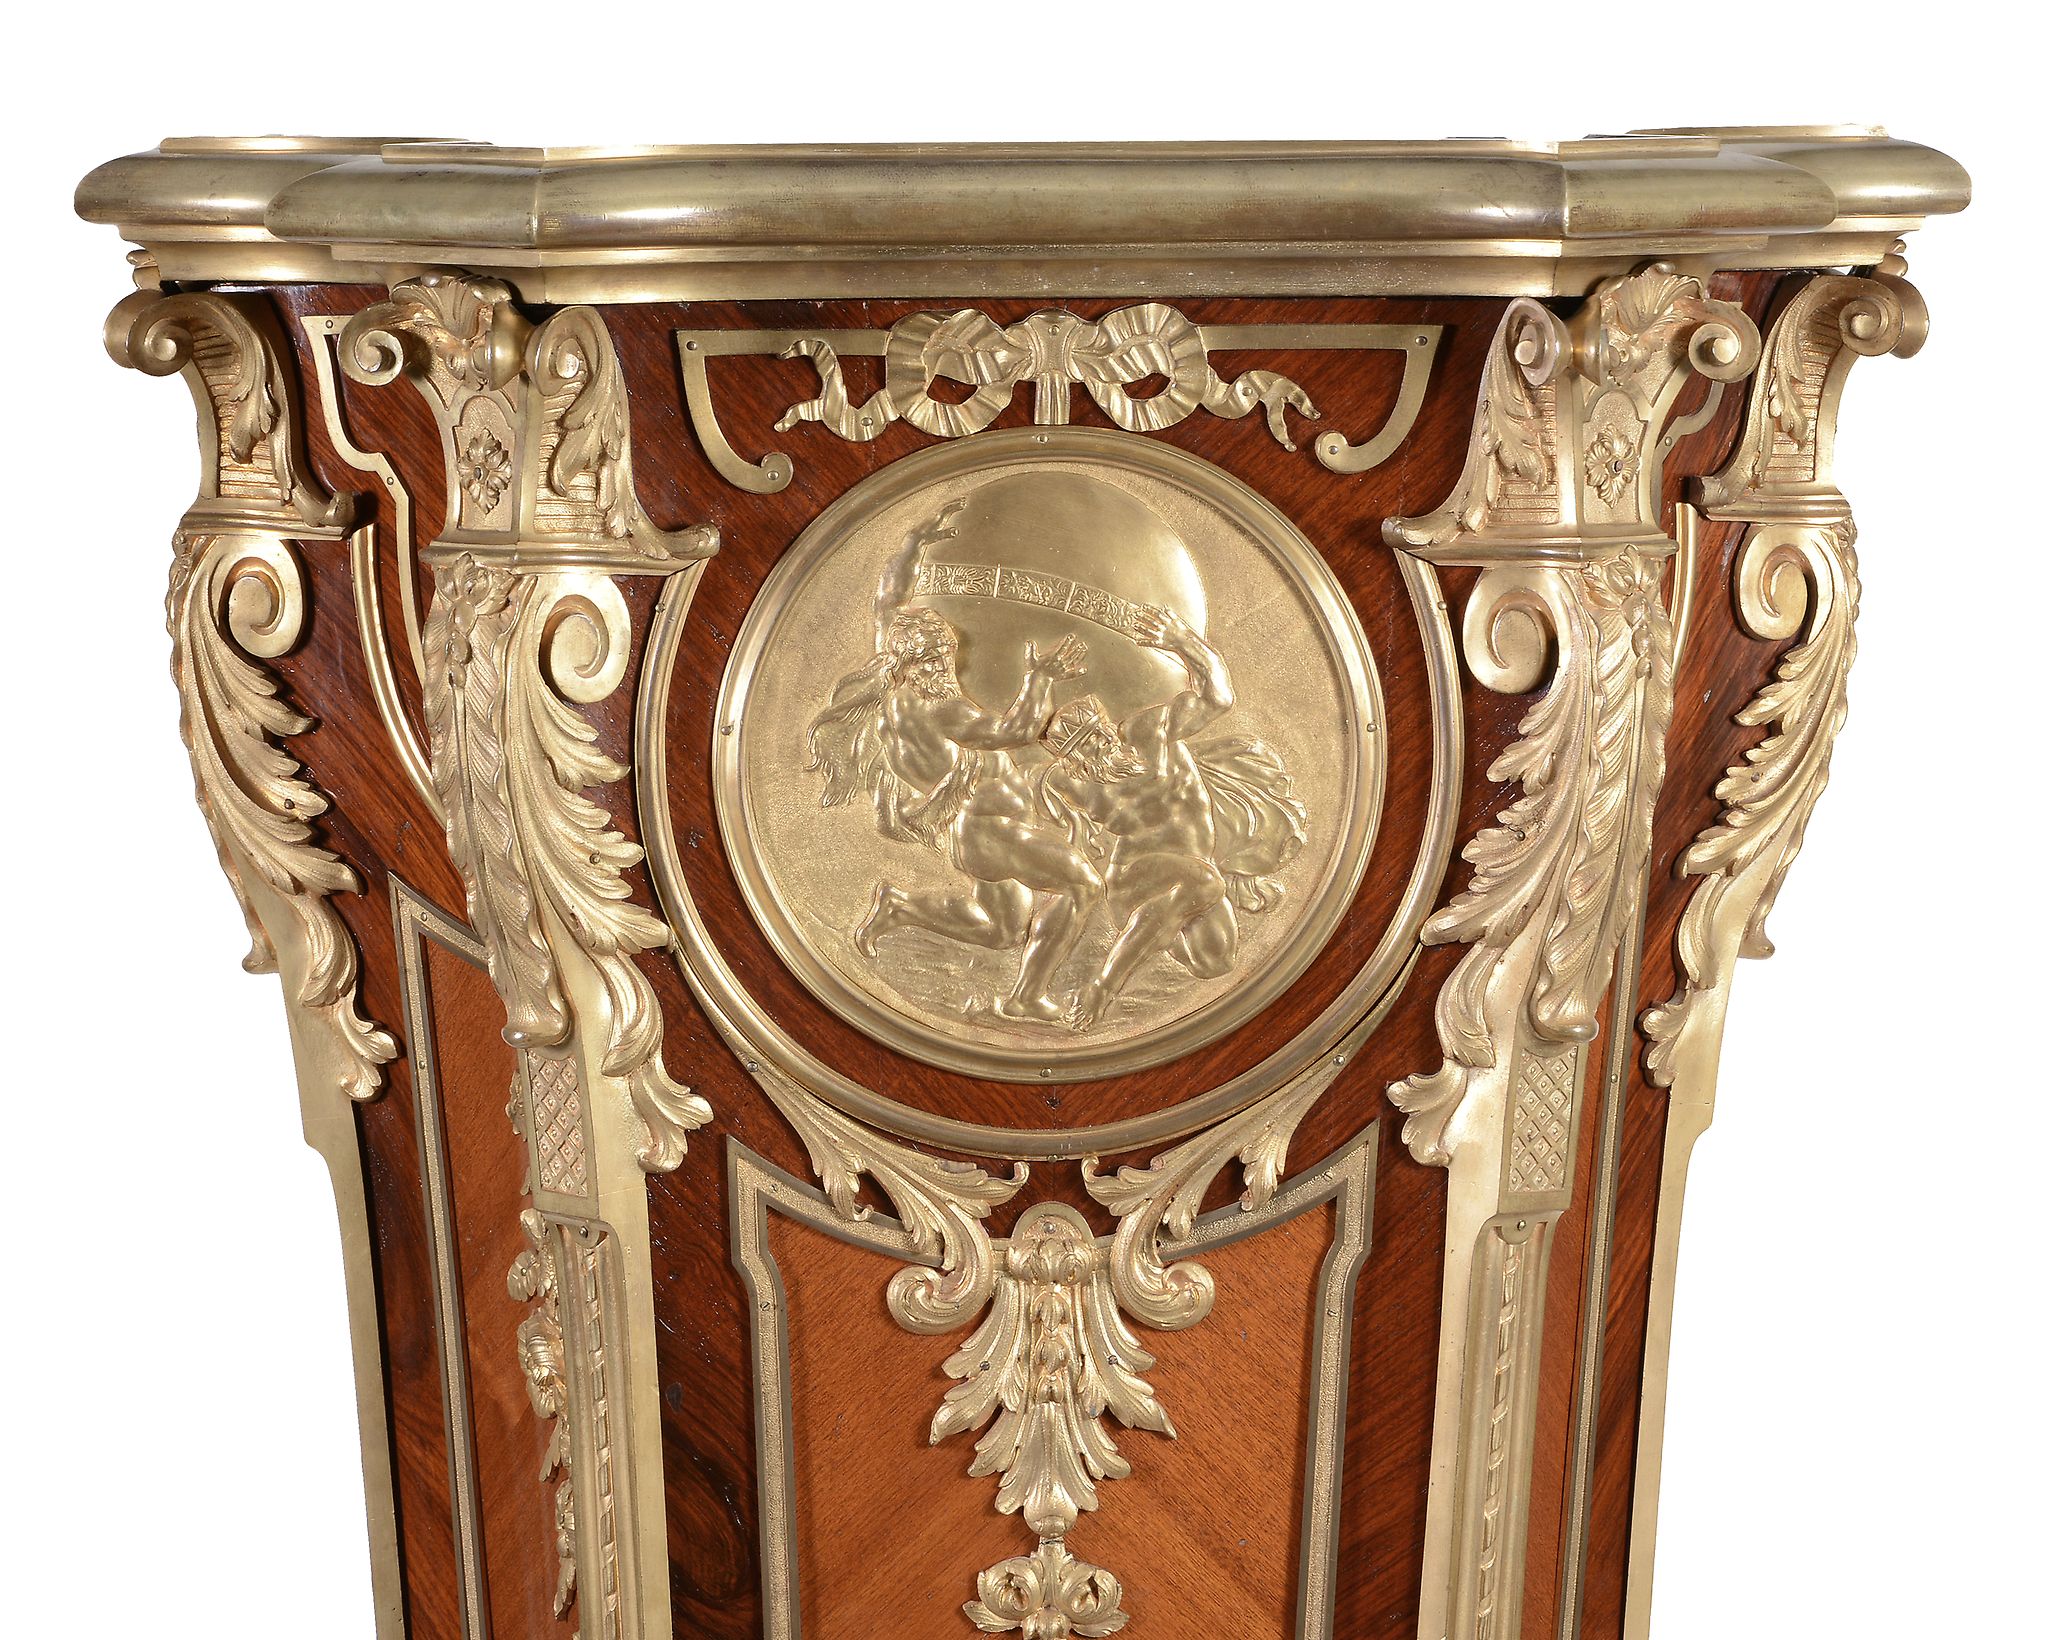 An impressive French Louis XV style ormolu mounted kingwood pedestal clock... - Image 4 of 4